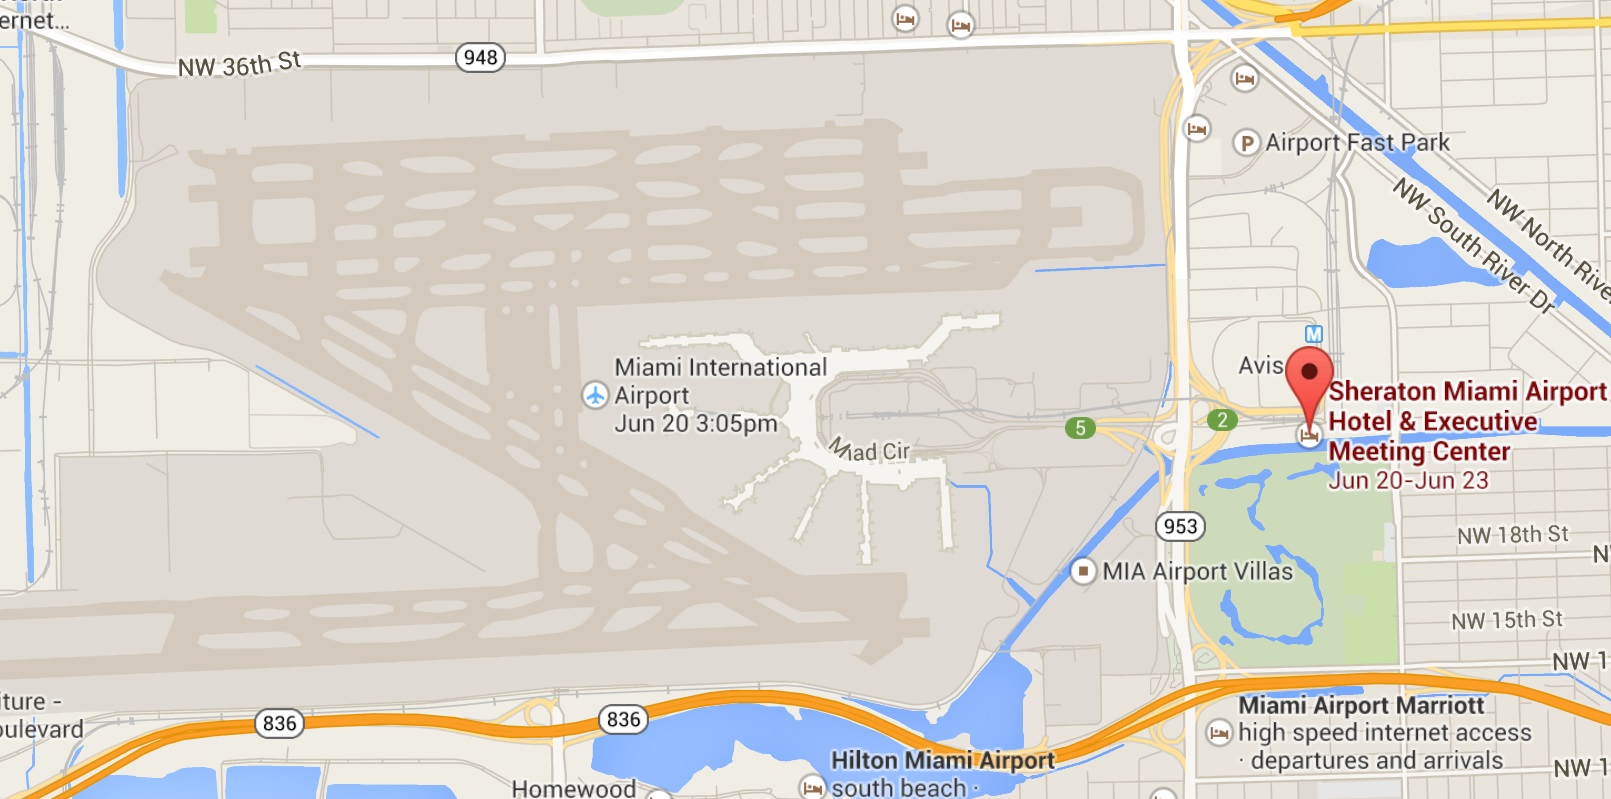 As more travel, Miami International Airport parking scarce - Miami